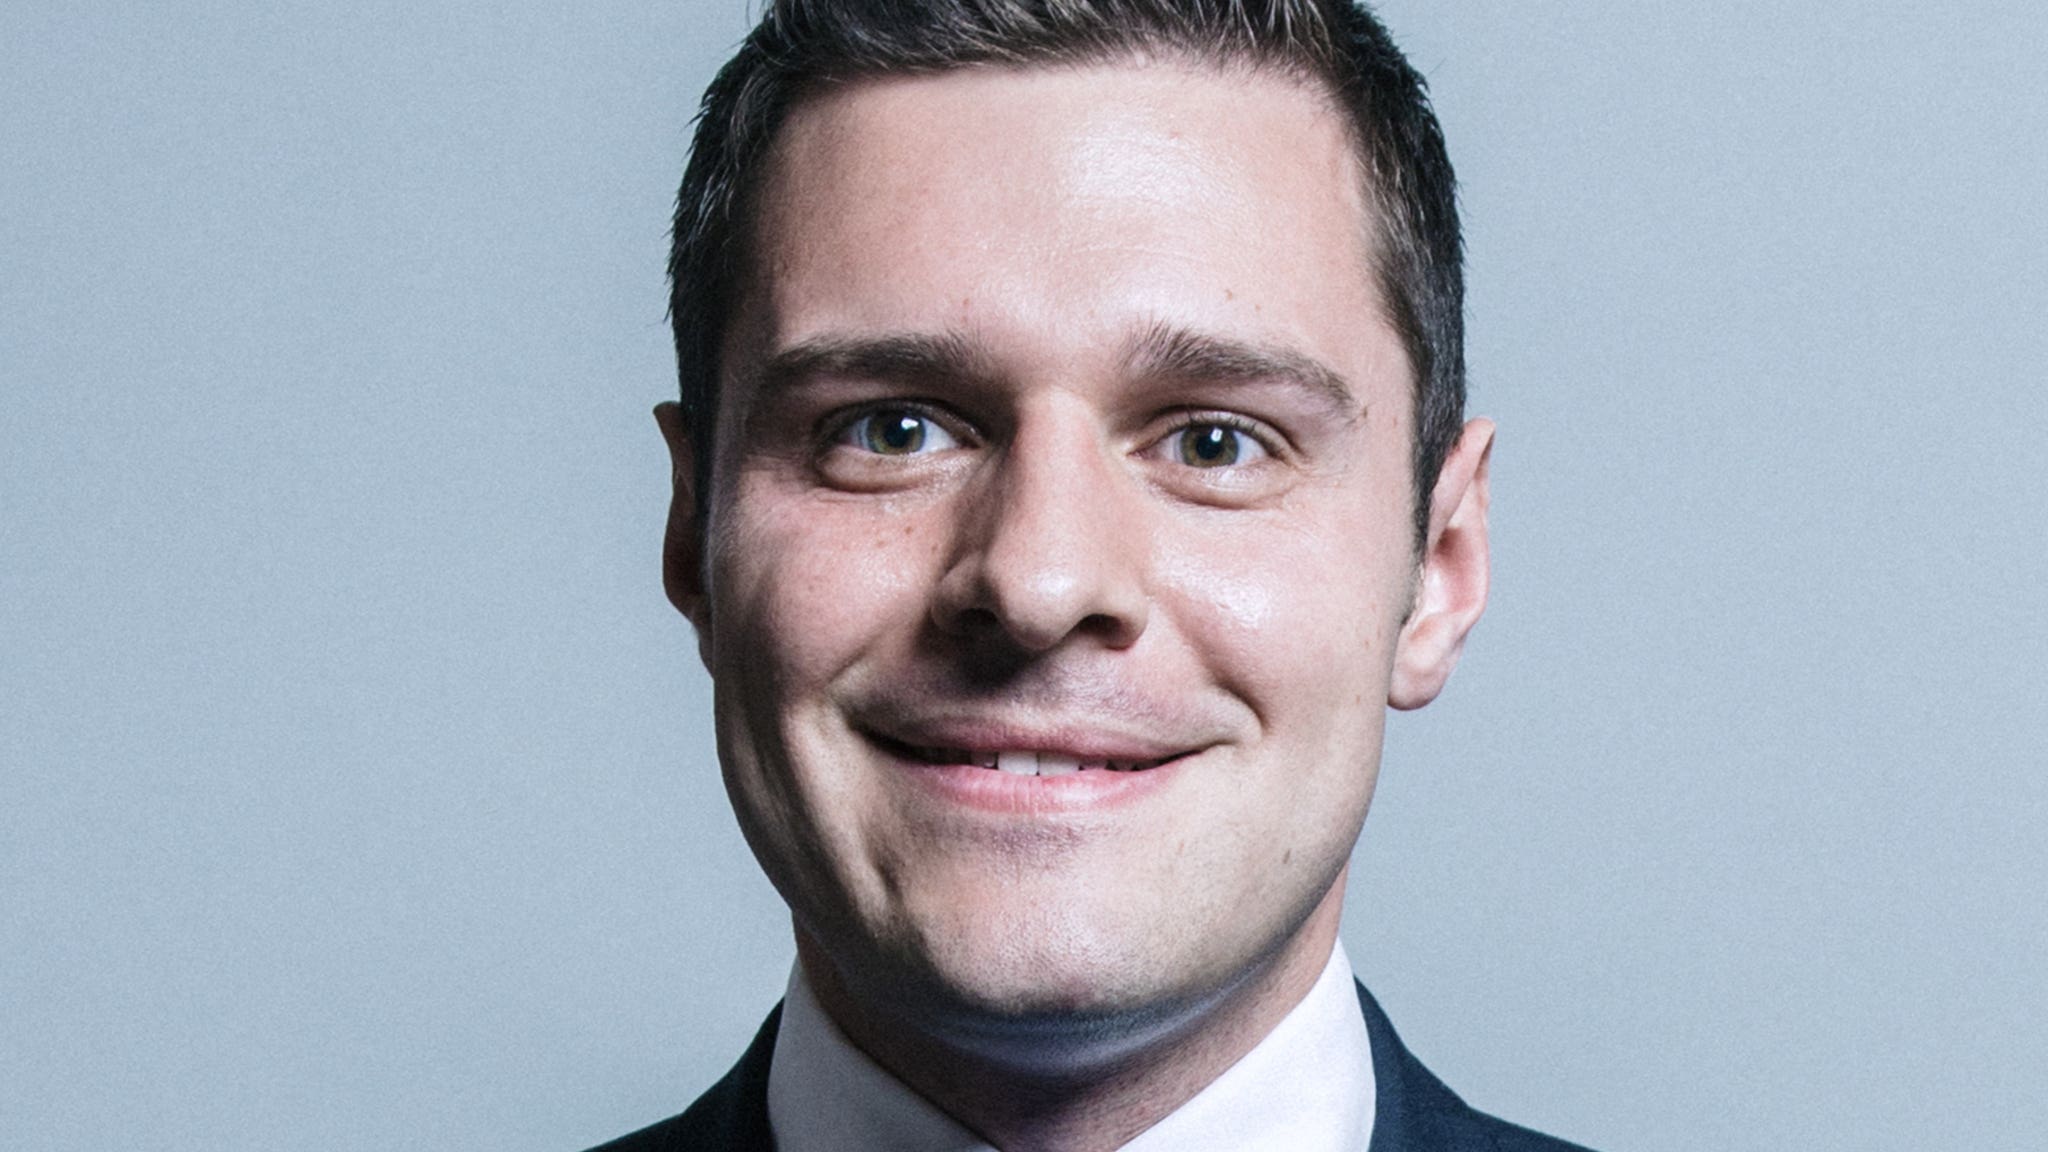 Ross Thomson MP